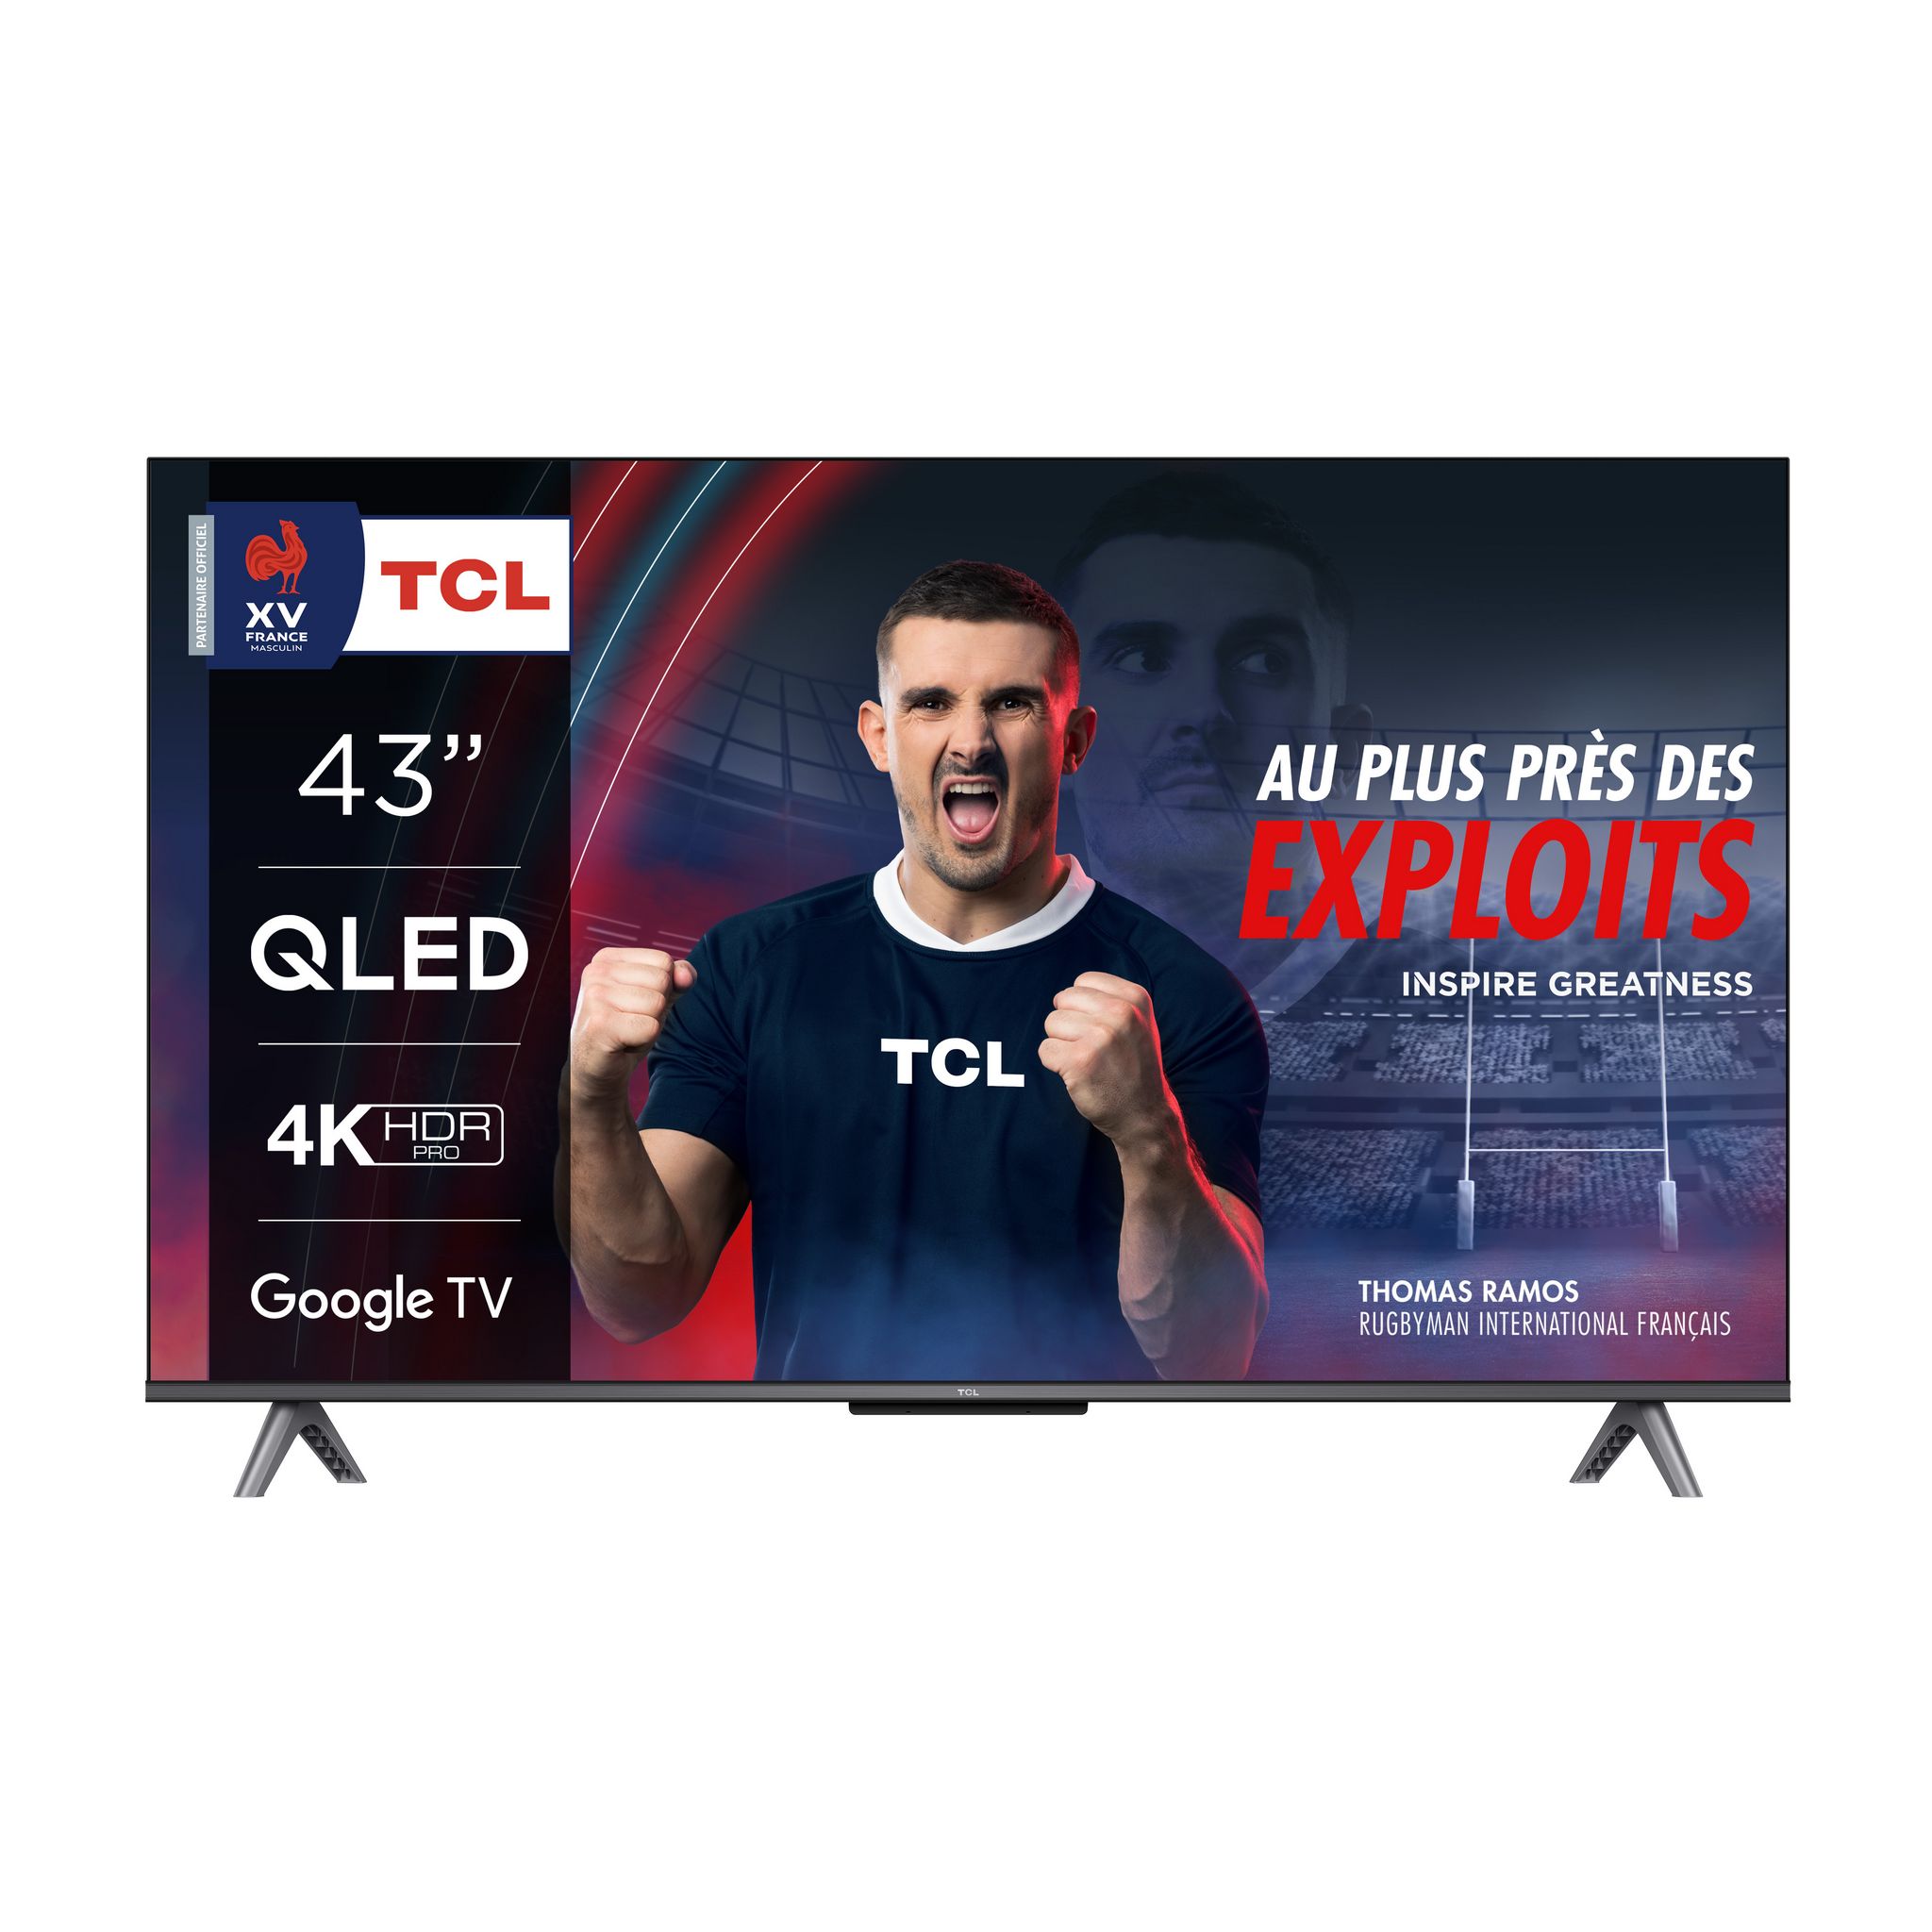 Buy TCL 43 QLED Smart Google TV, 43C645 at Reliance Digital